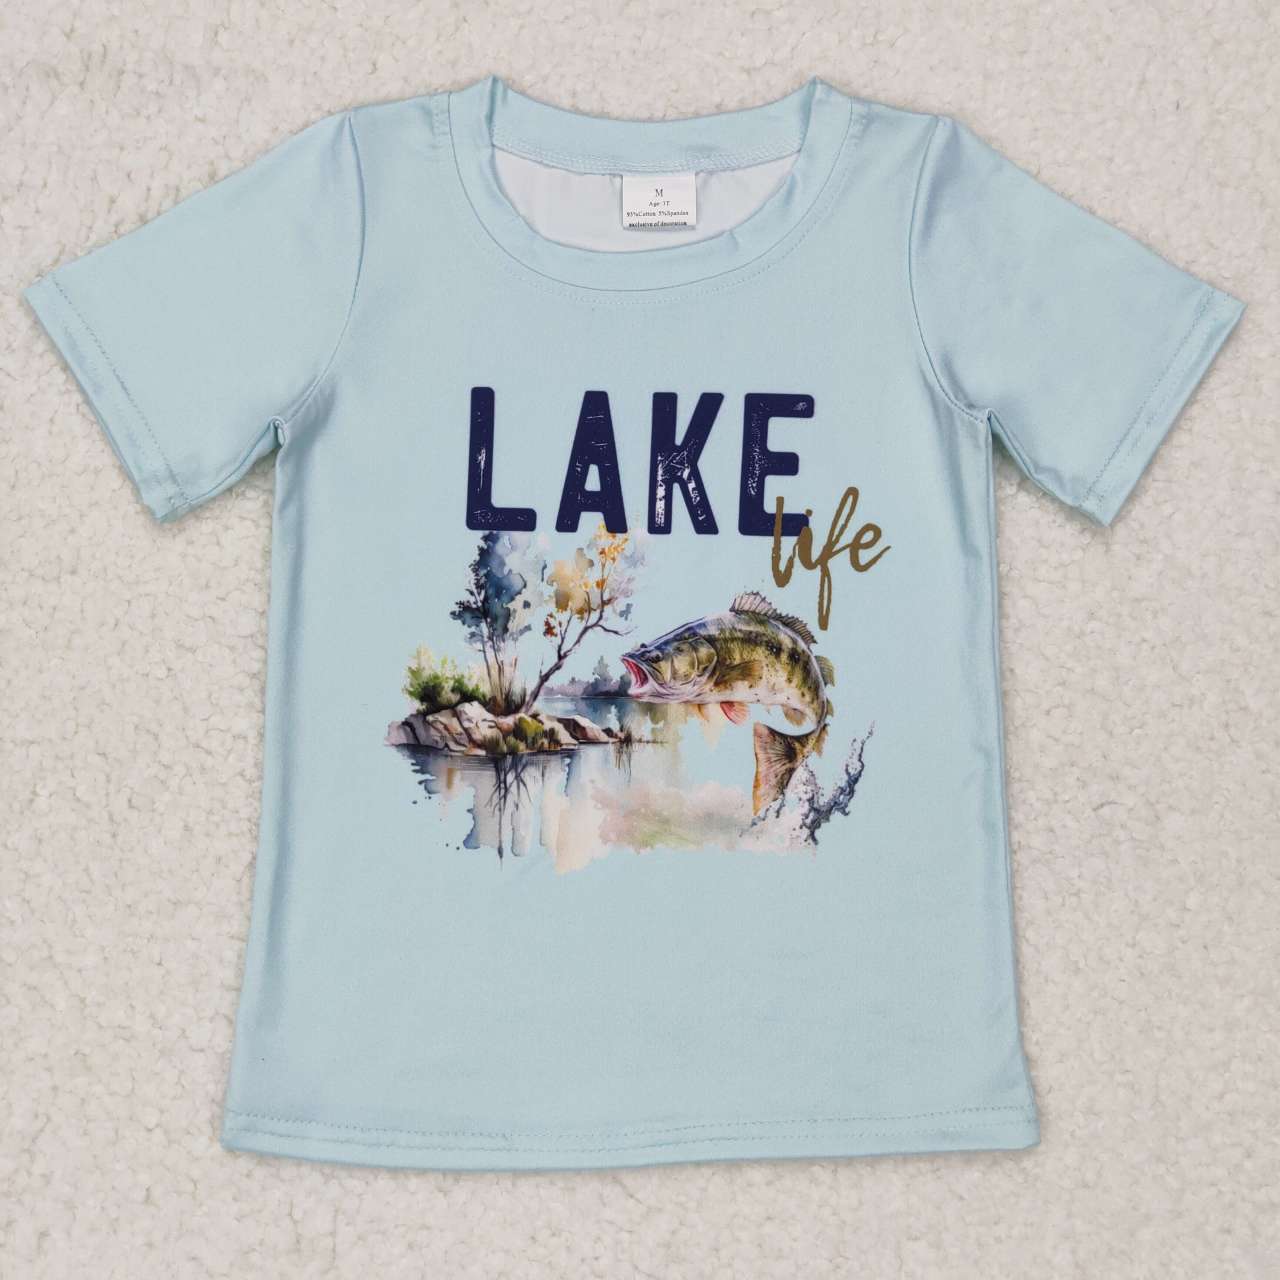 BT0339 Aqua Lake life fish print boys tee shirts top